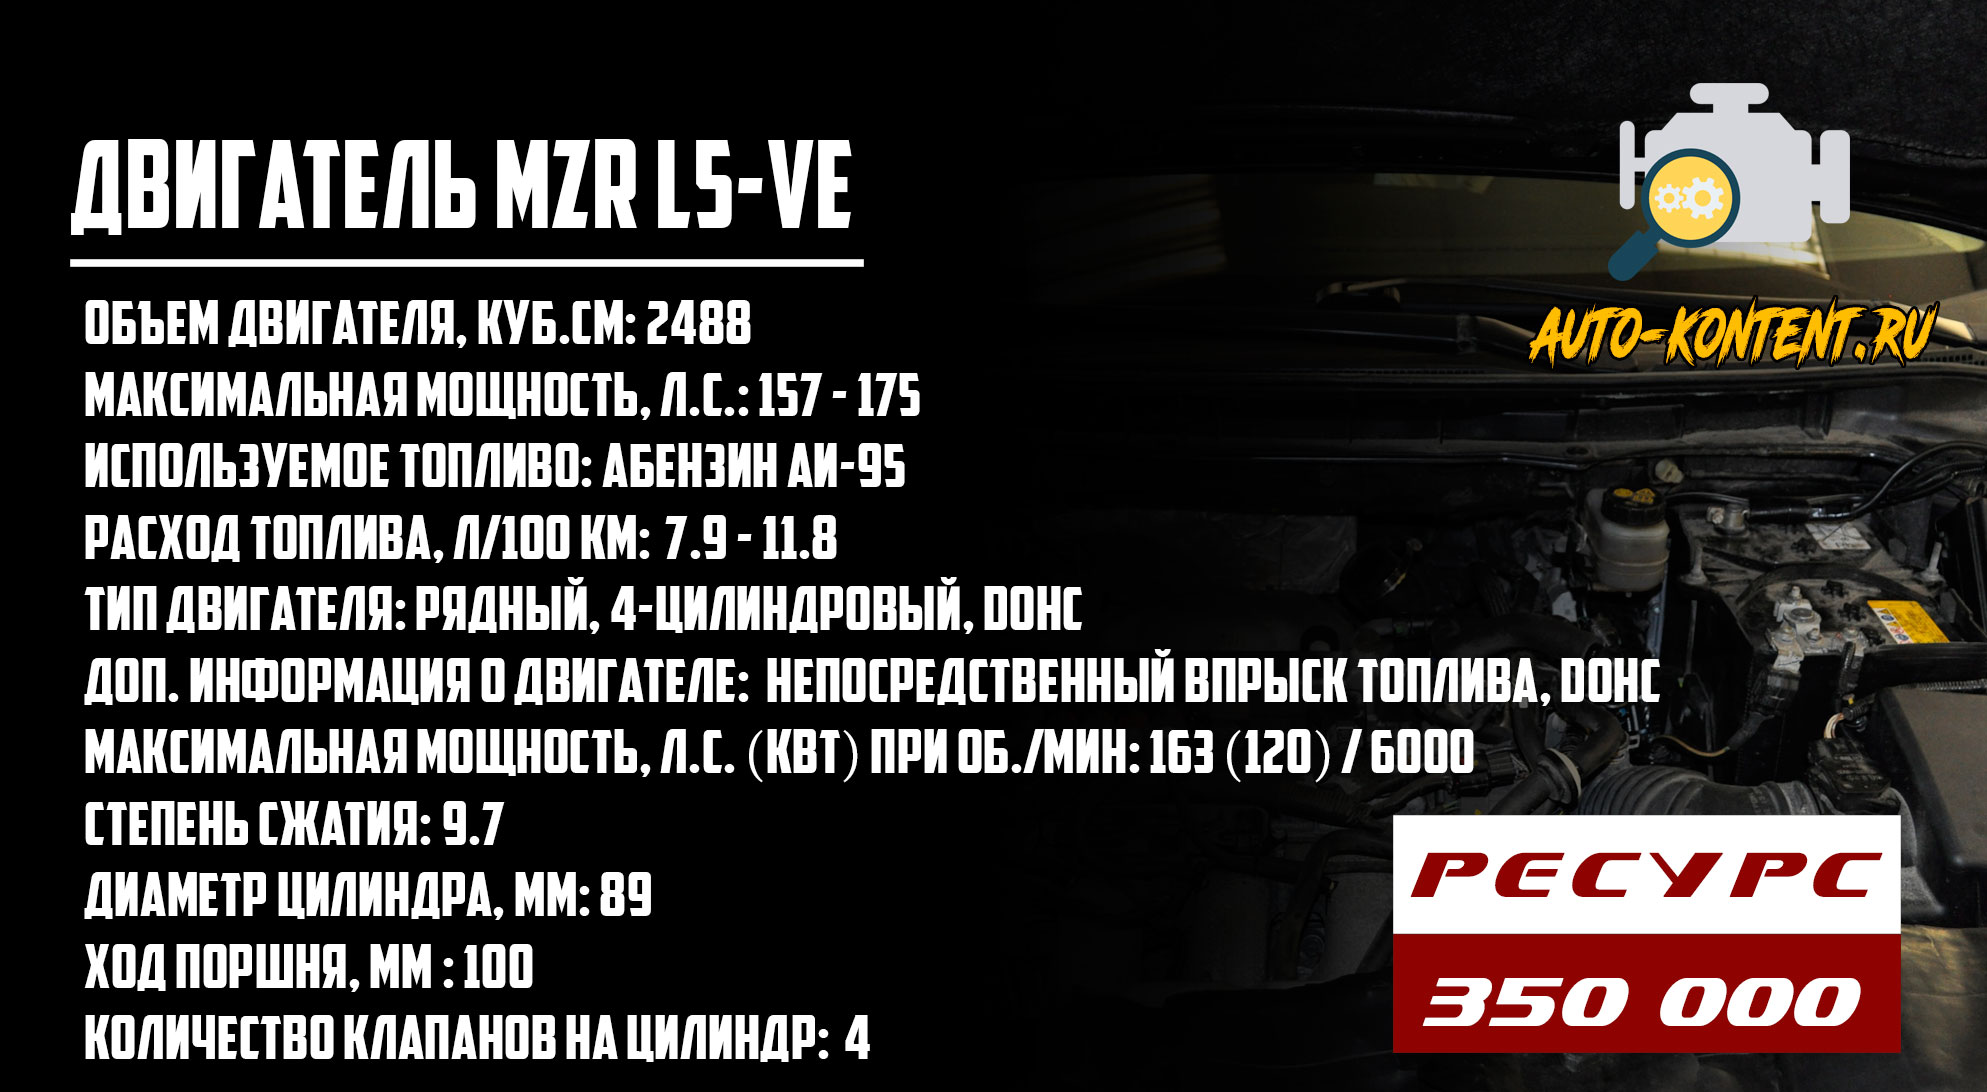 MZR L5-VE